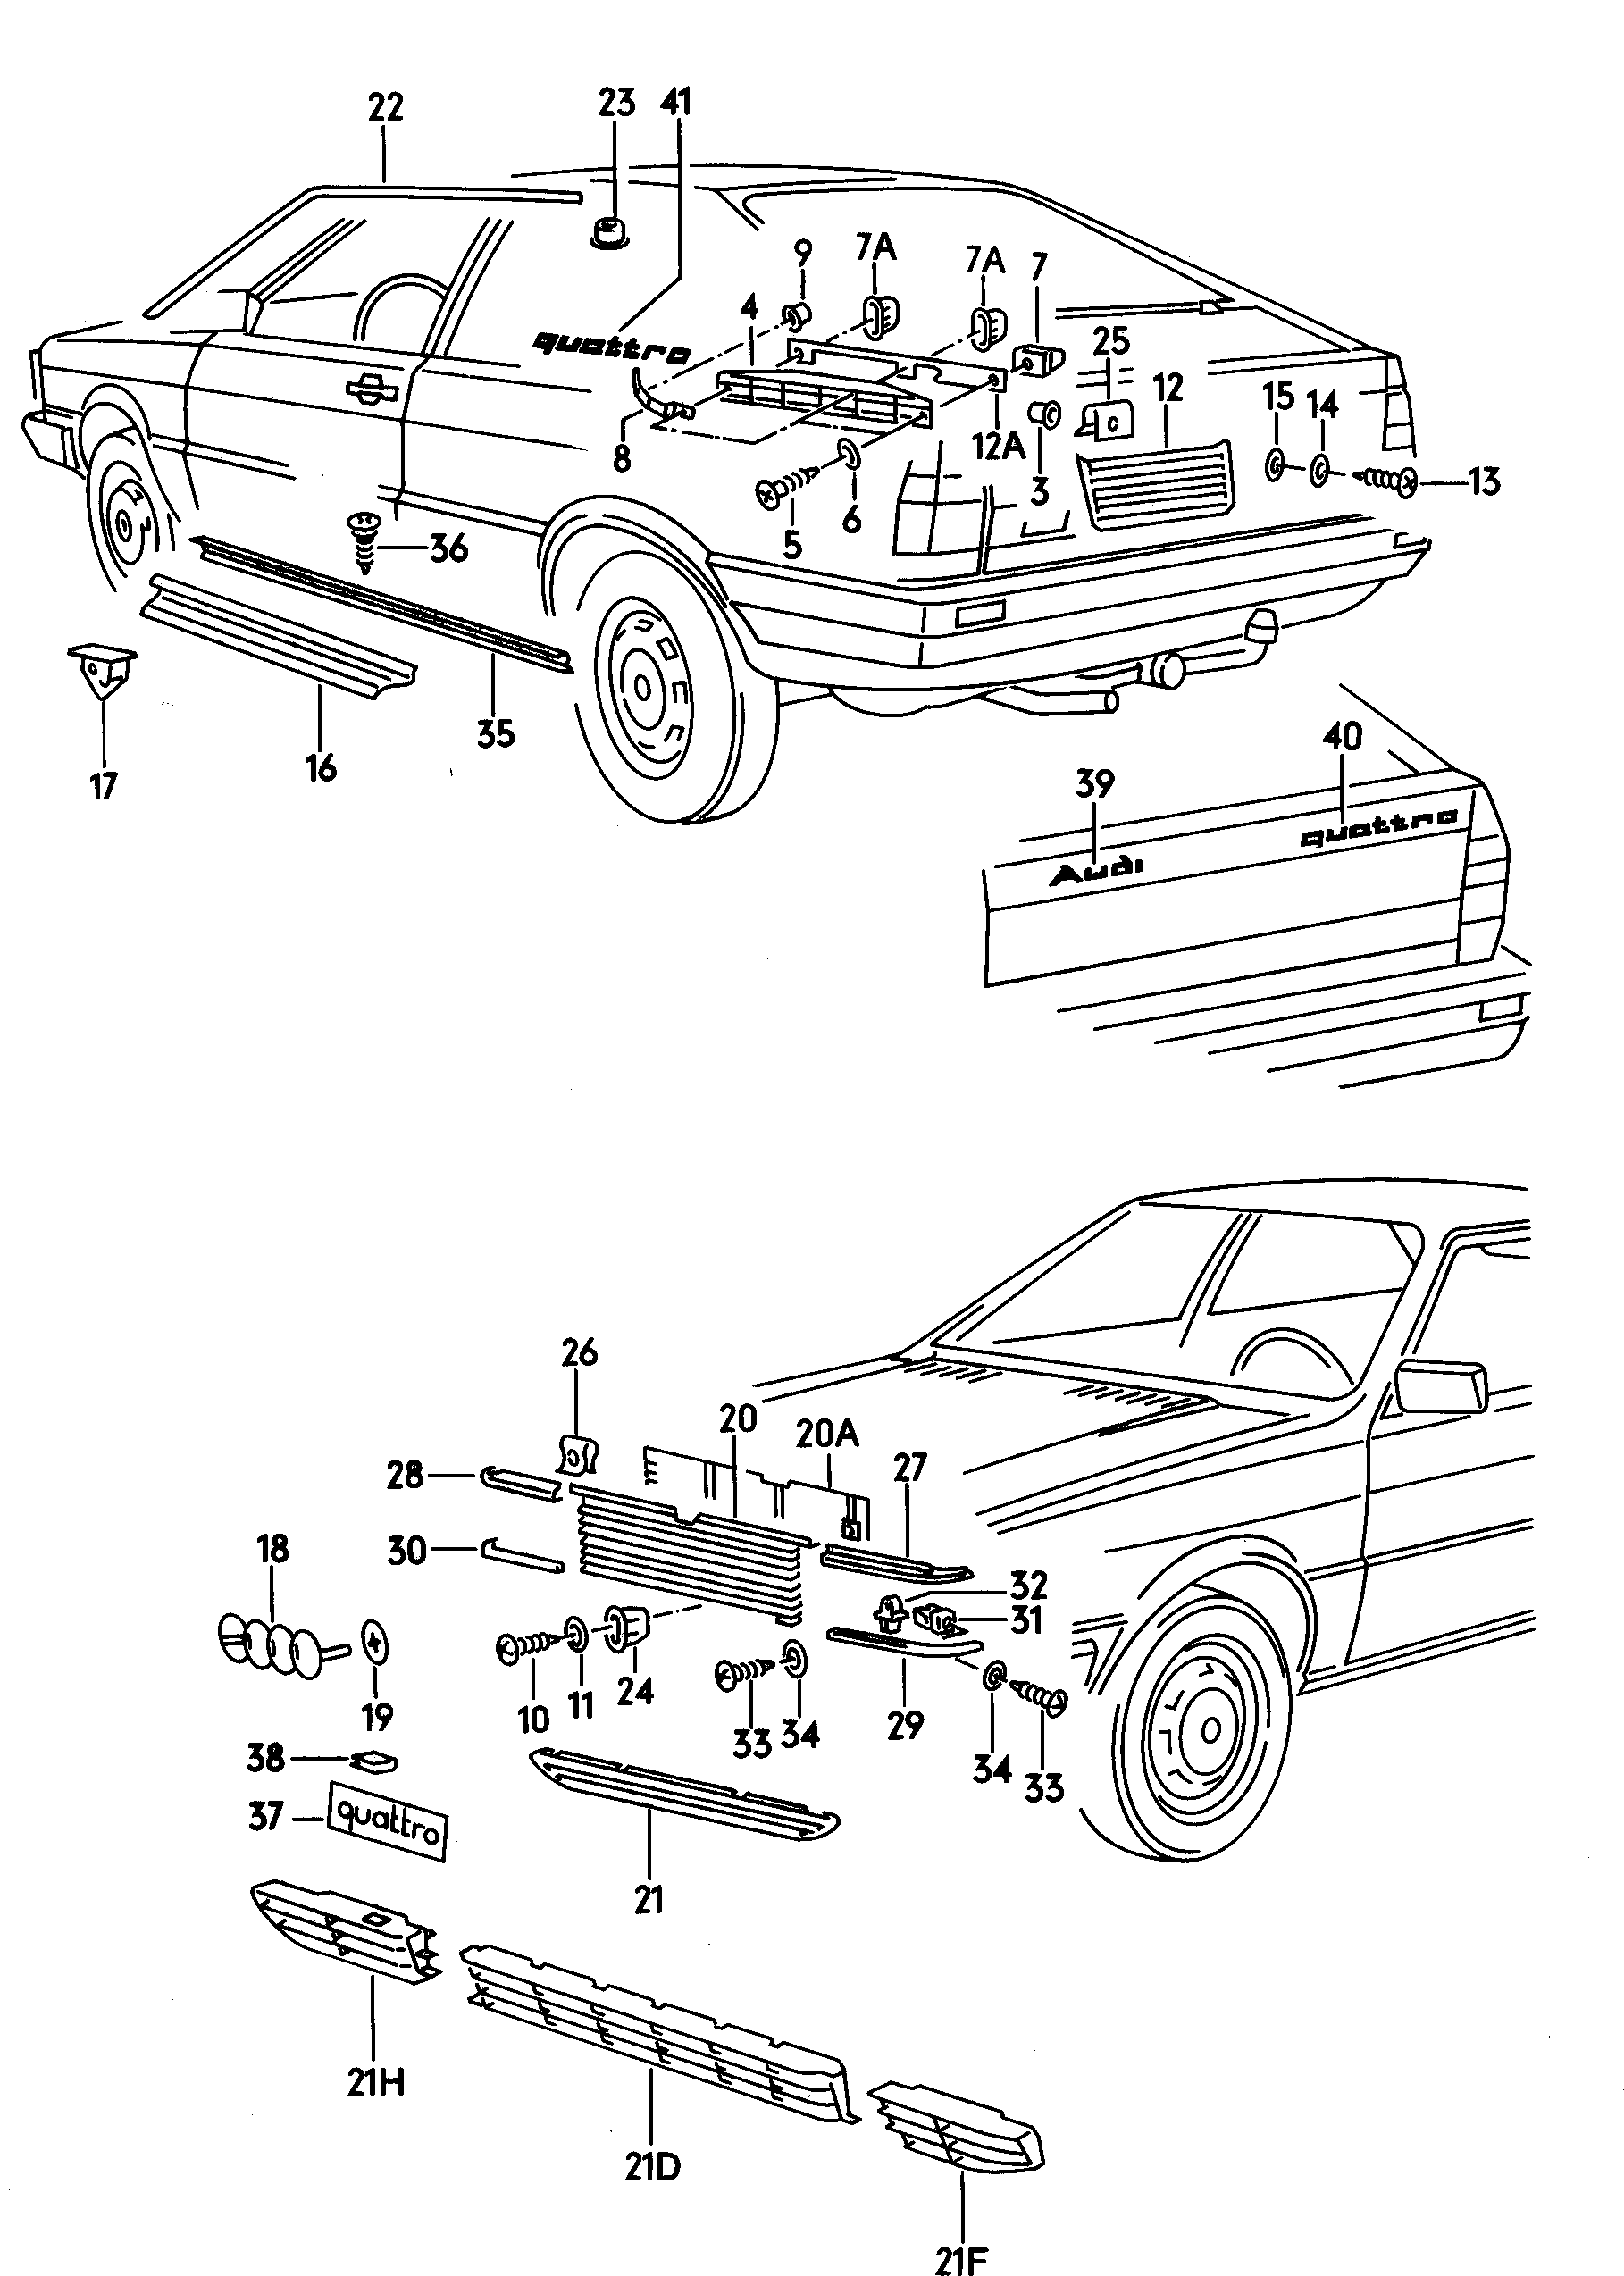 inscriptions/lettering rear - Audi Coupe quattro - acoq